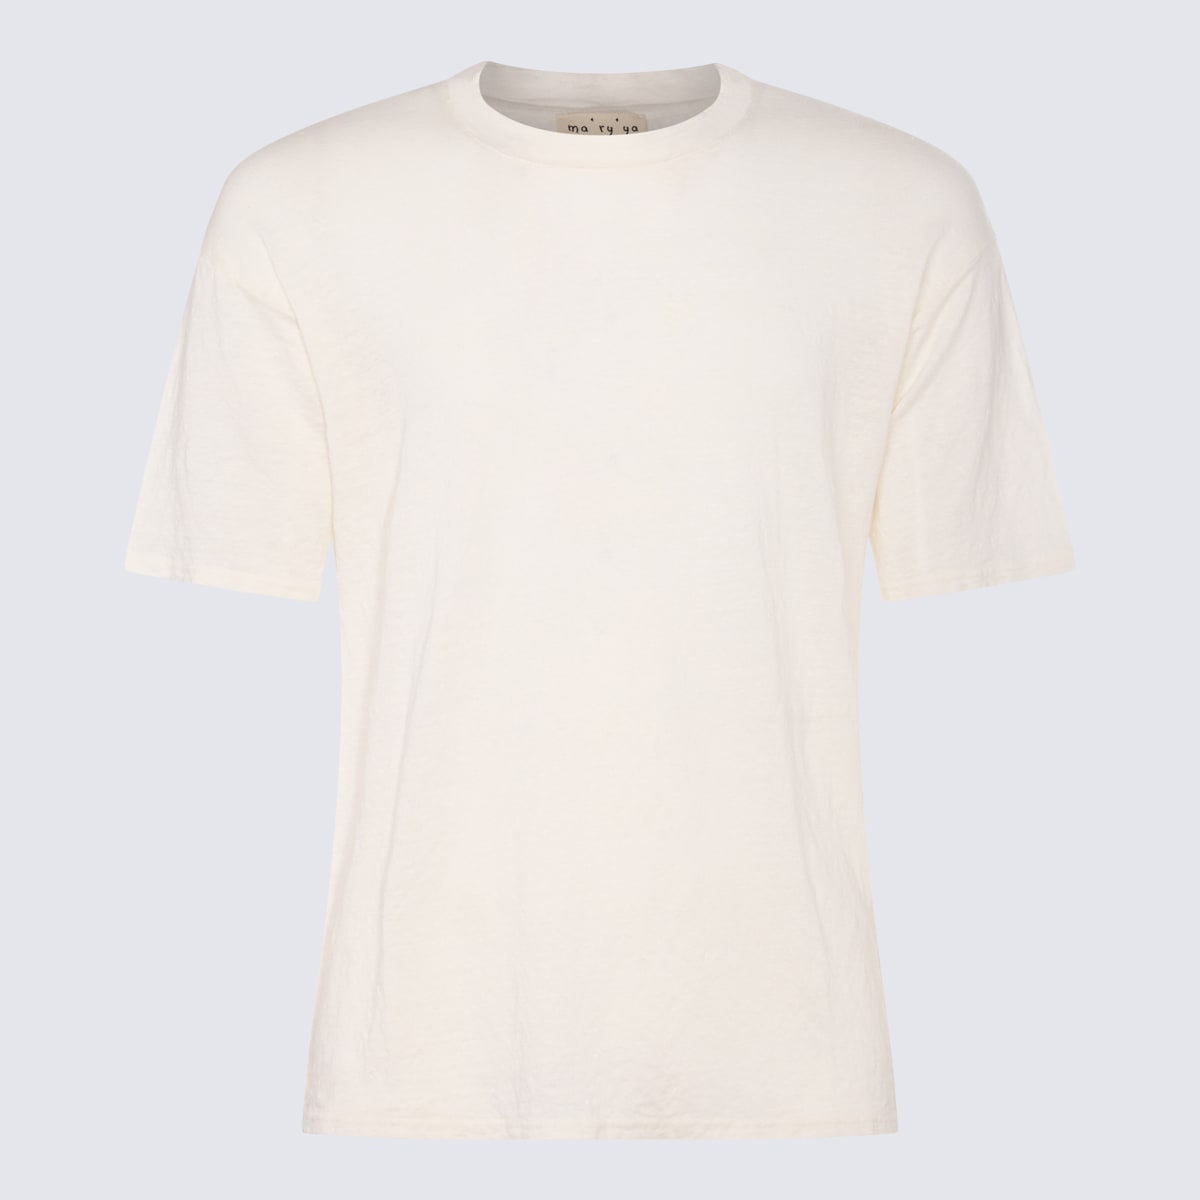 Shop Ma'ry'ya White Linen T-shirt